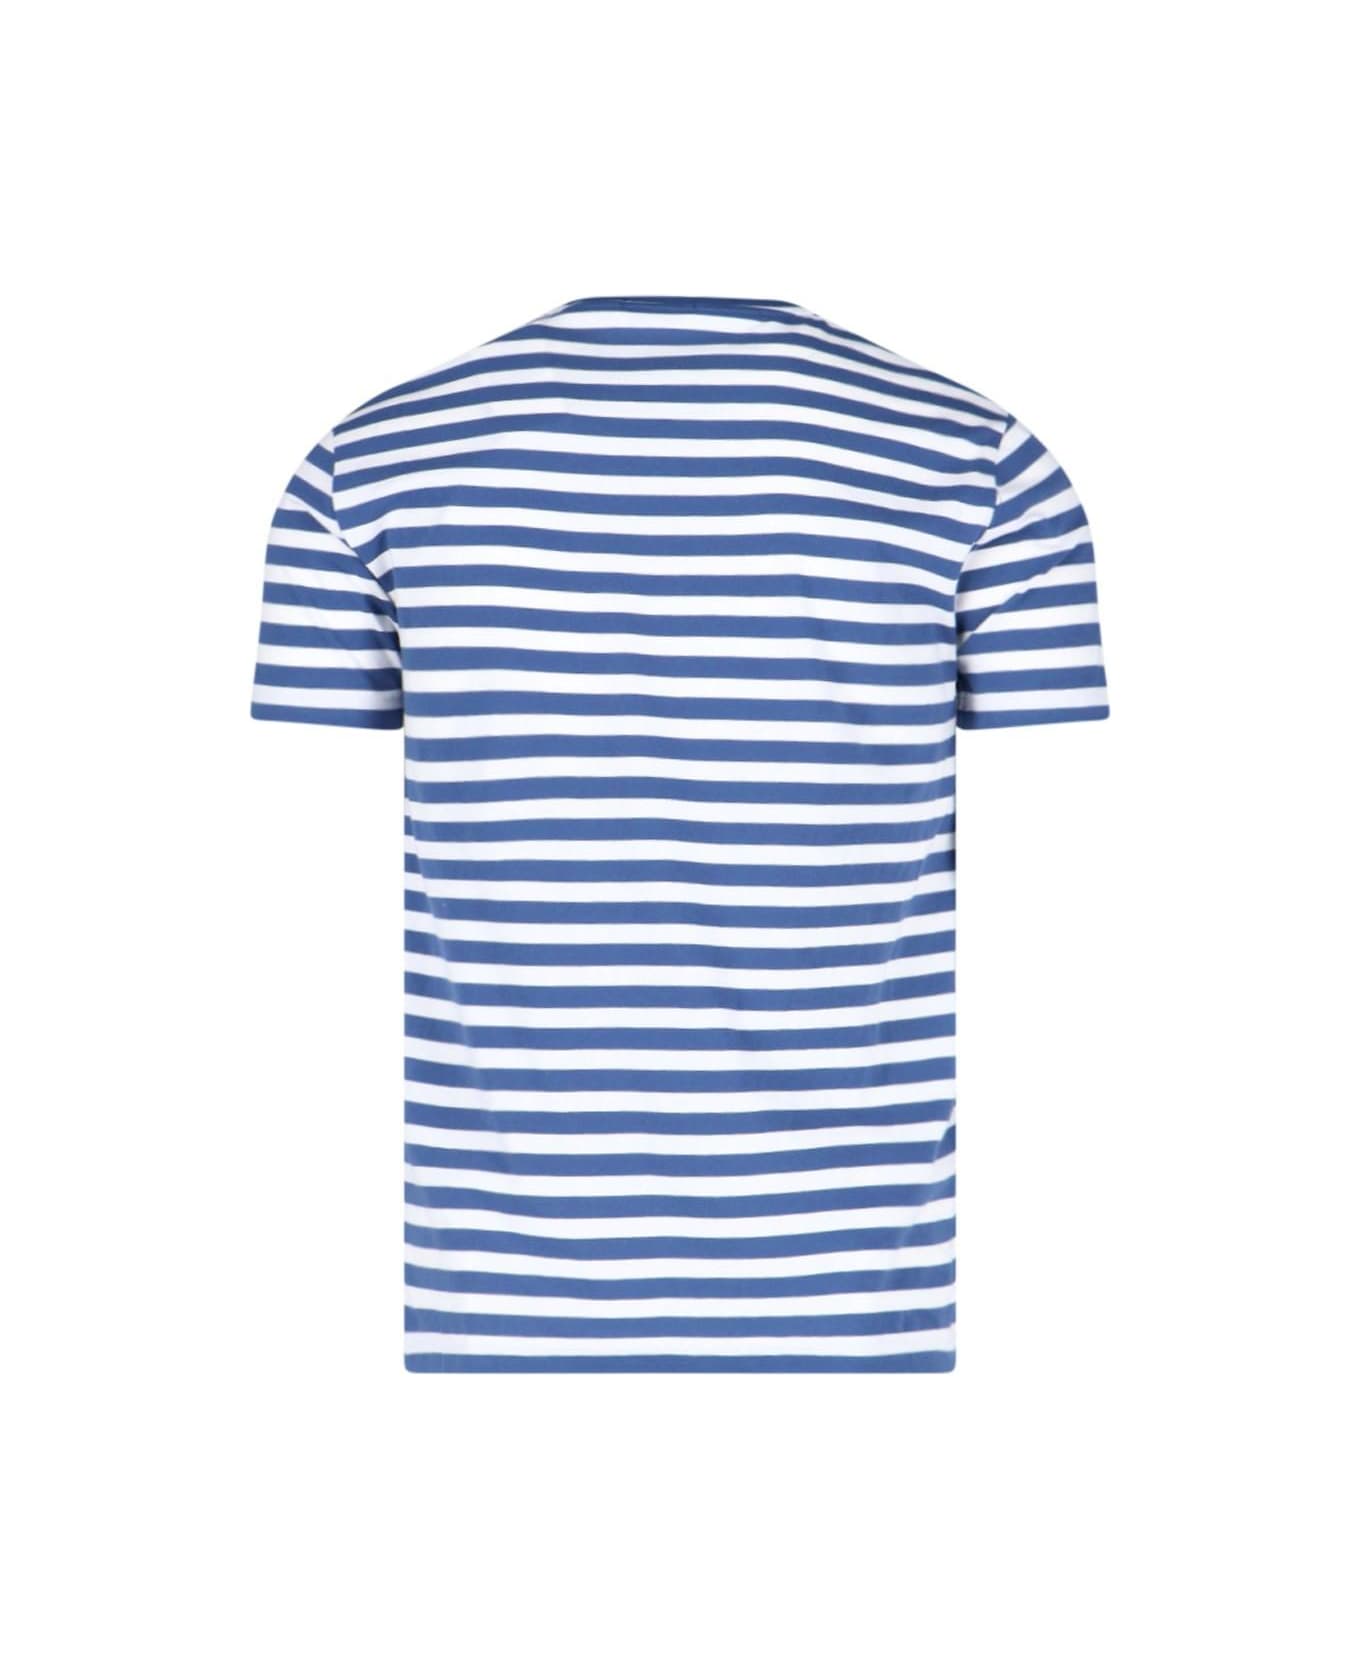 Ralph Lauren Logo Striped T-shirt - Old Royal White